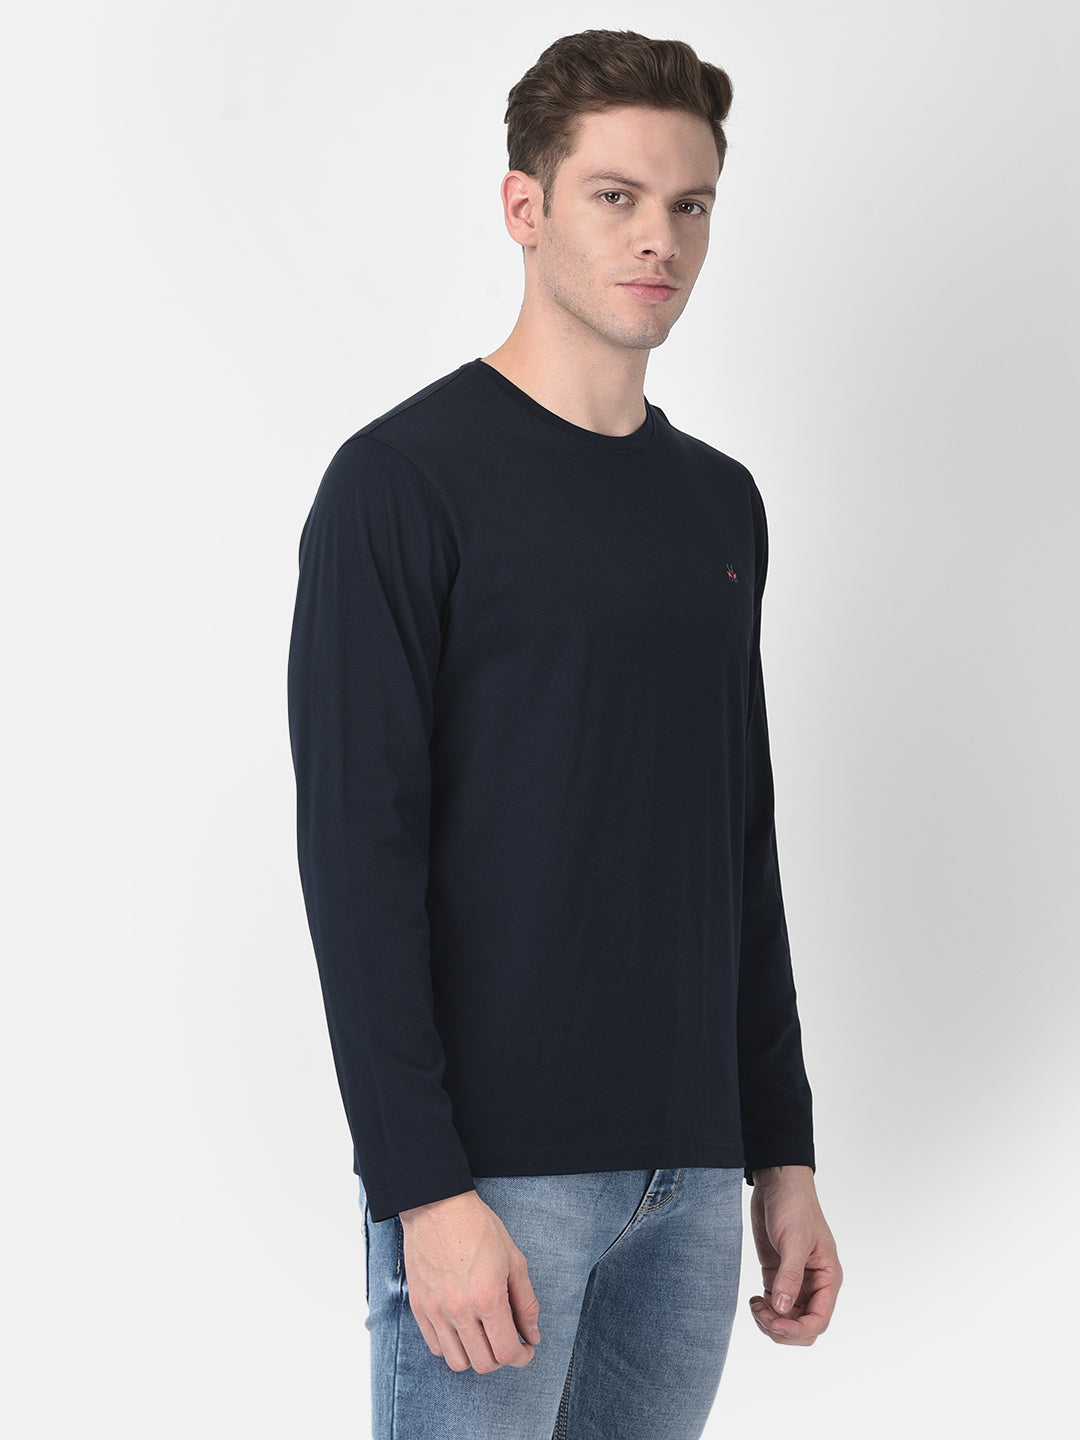 Long-Sleeved Navy Blue T-Shirt-Men T-Shirts-Crimsoune Club